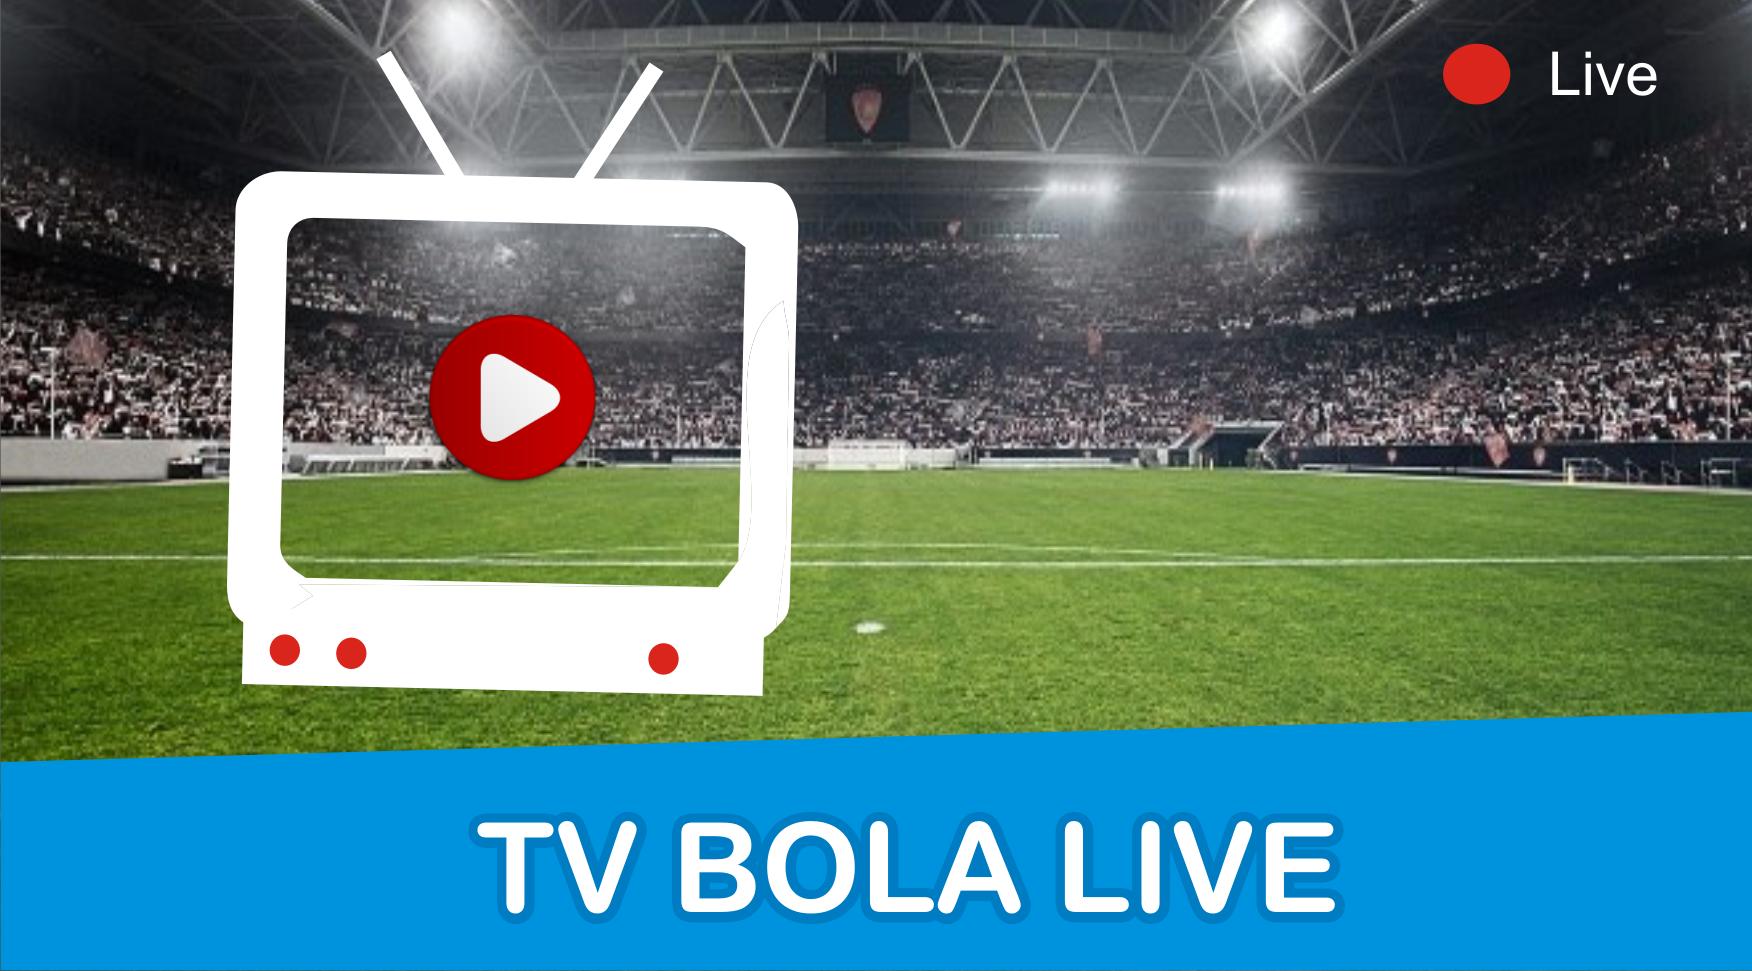 Live streaming bola liga. Live Bola. Bola TV Live. Live streaming Bola. Live streaming Bola TV.